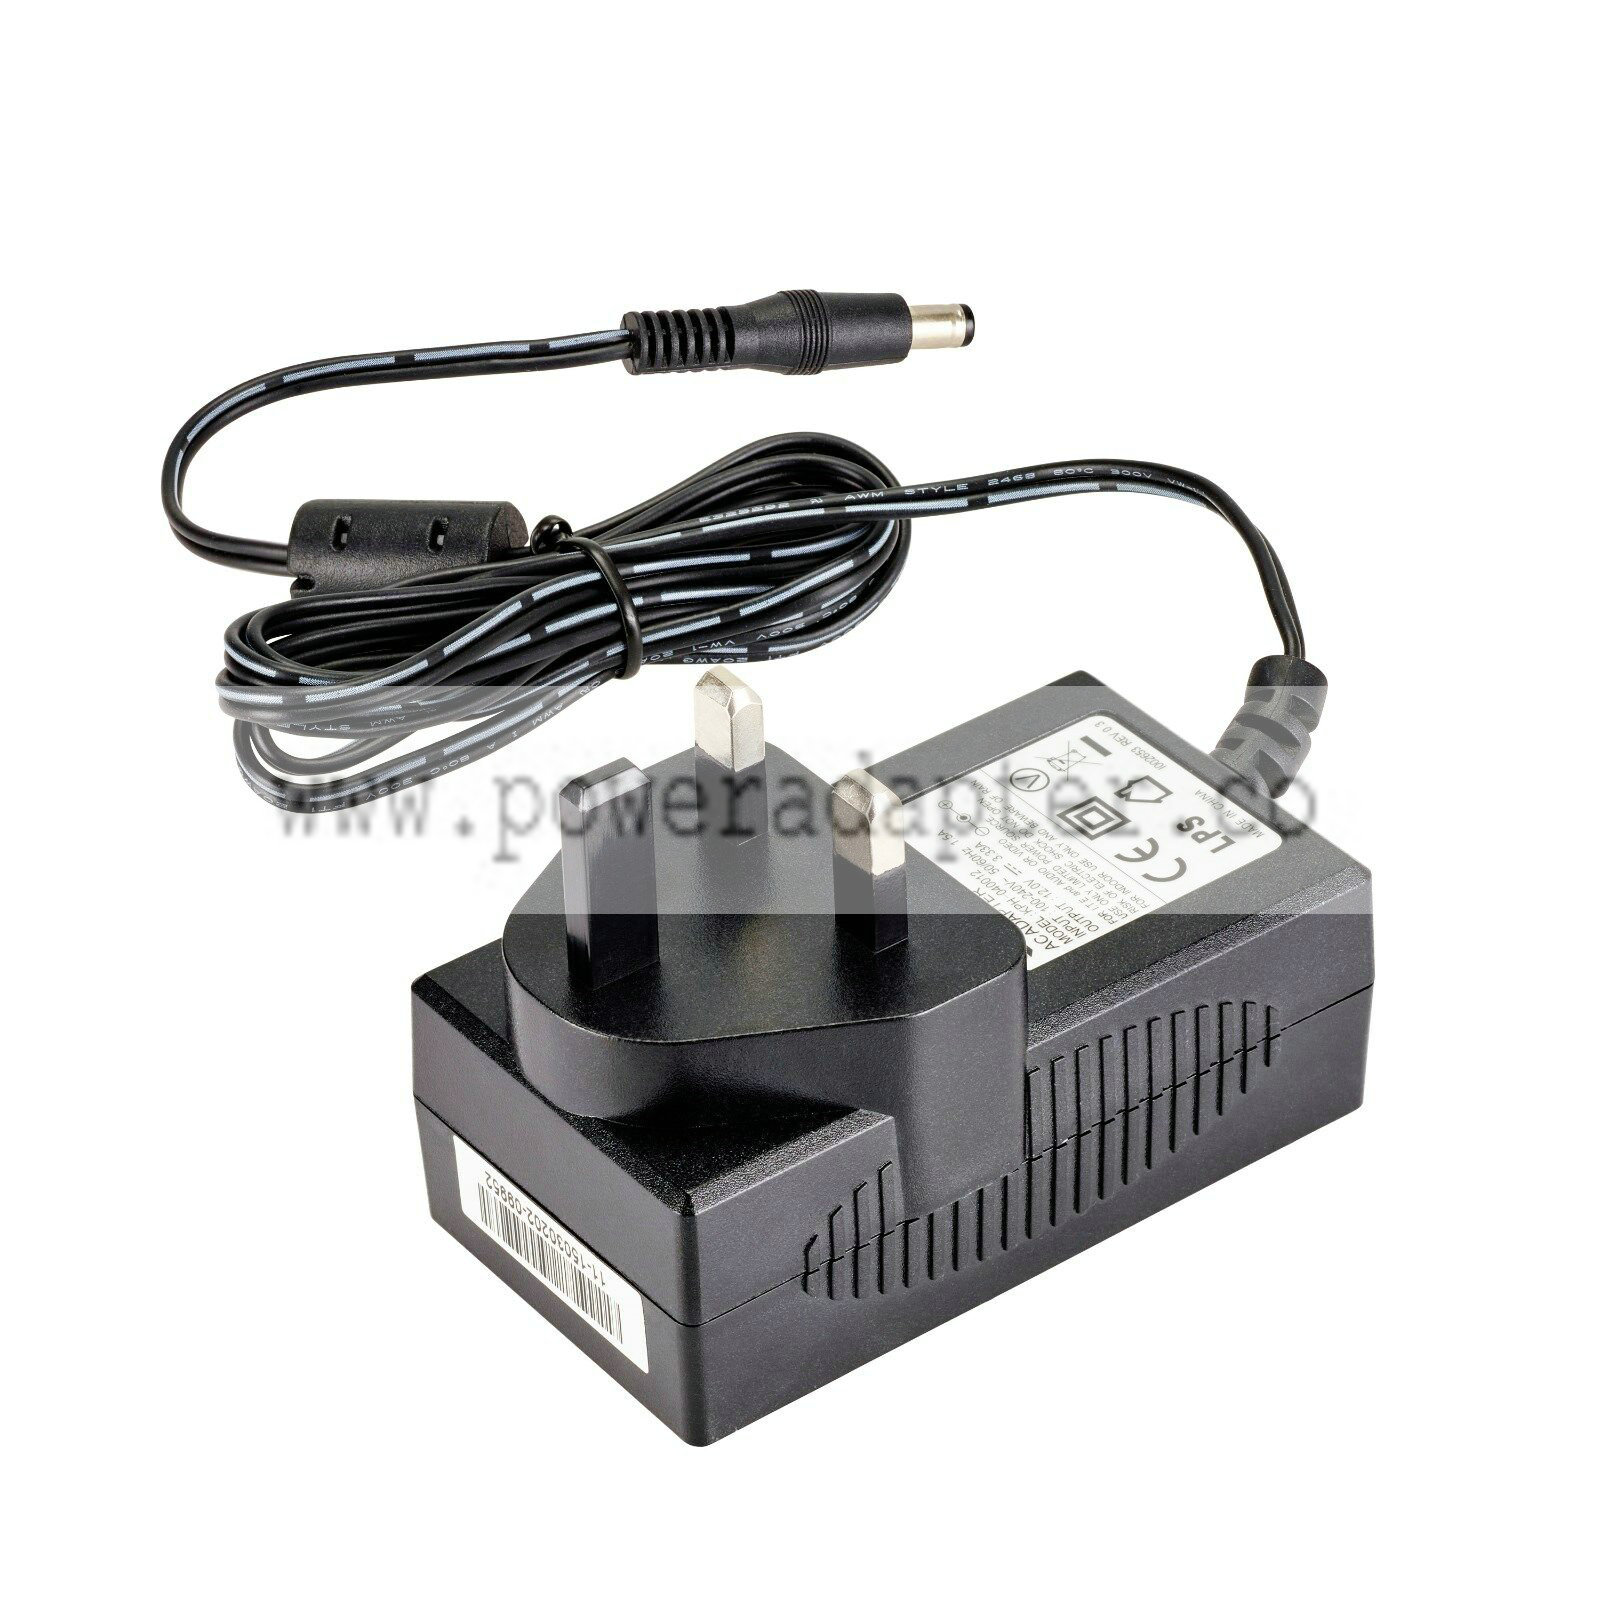 12V 3A AC-DC Power Supply Adapter Charger for Goodmans C20230F C20230DVB LED TV Description : This UK plug adaptor